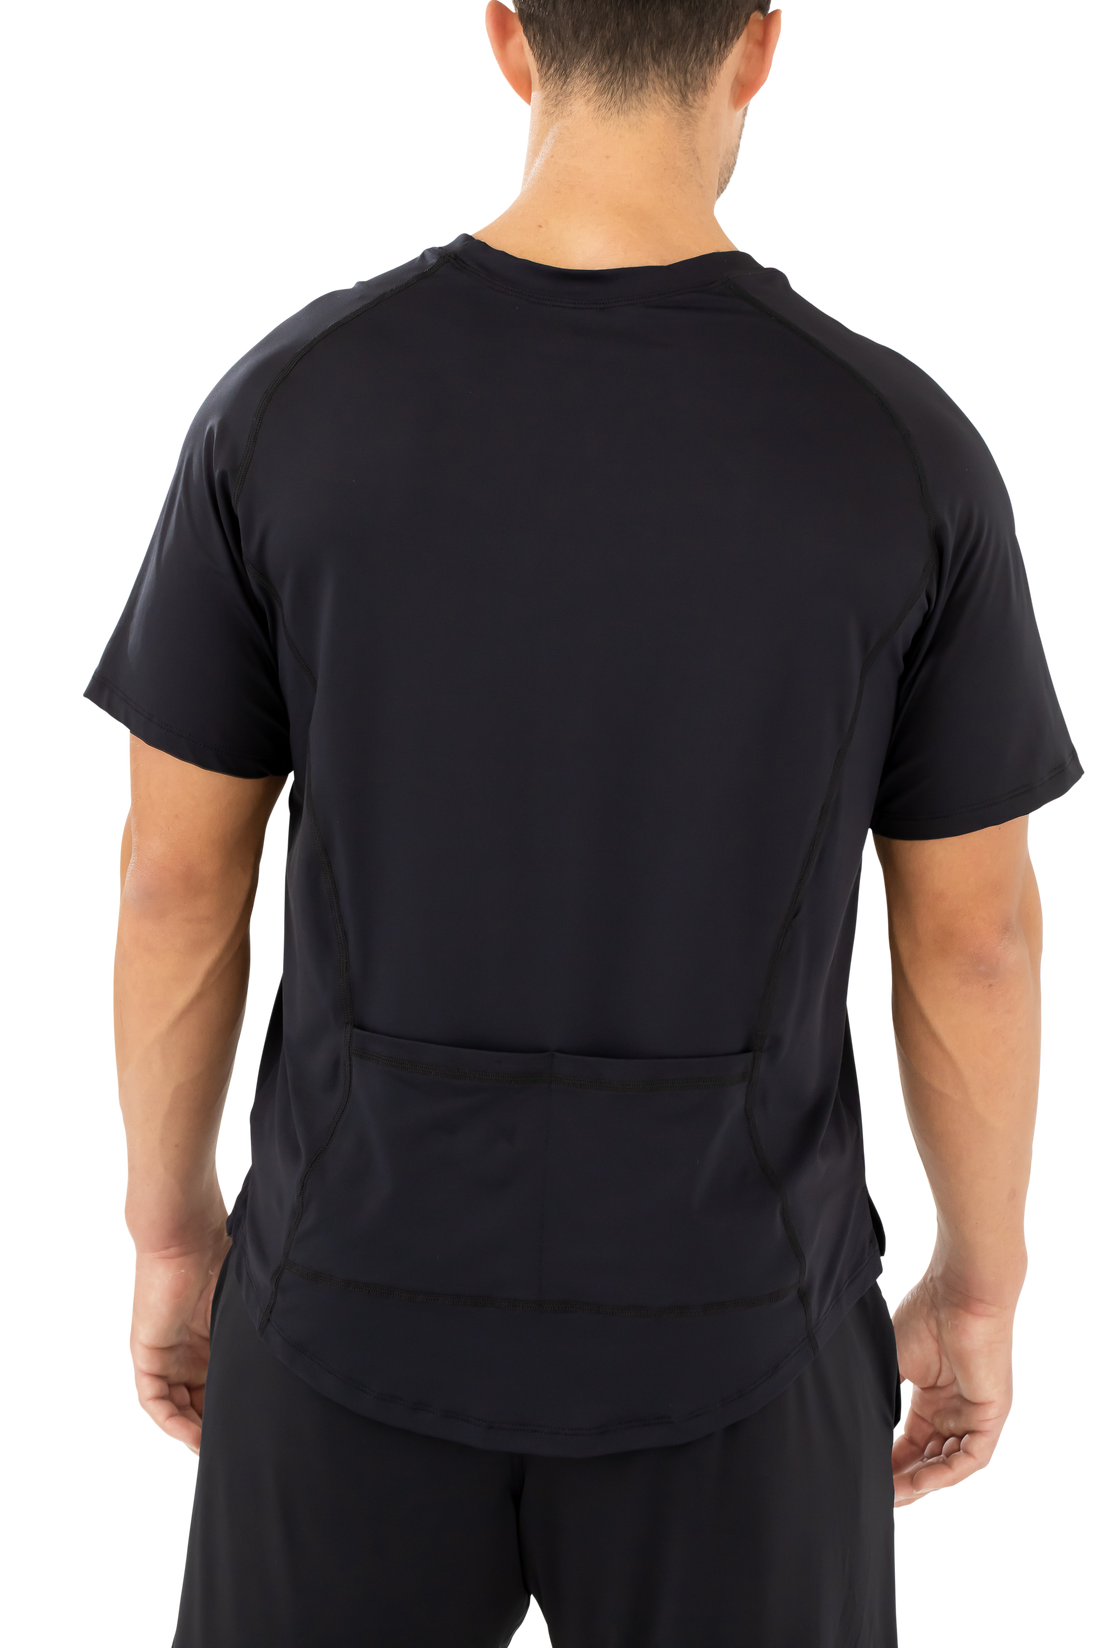 Camiseta Gator Tech - Ultraligera - South Bay Squad - Pecho izquierdo